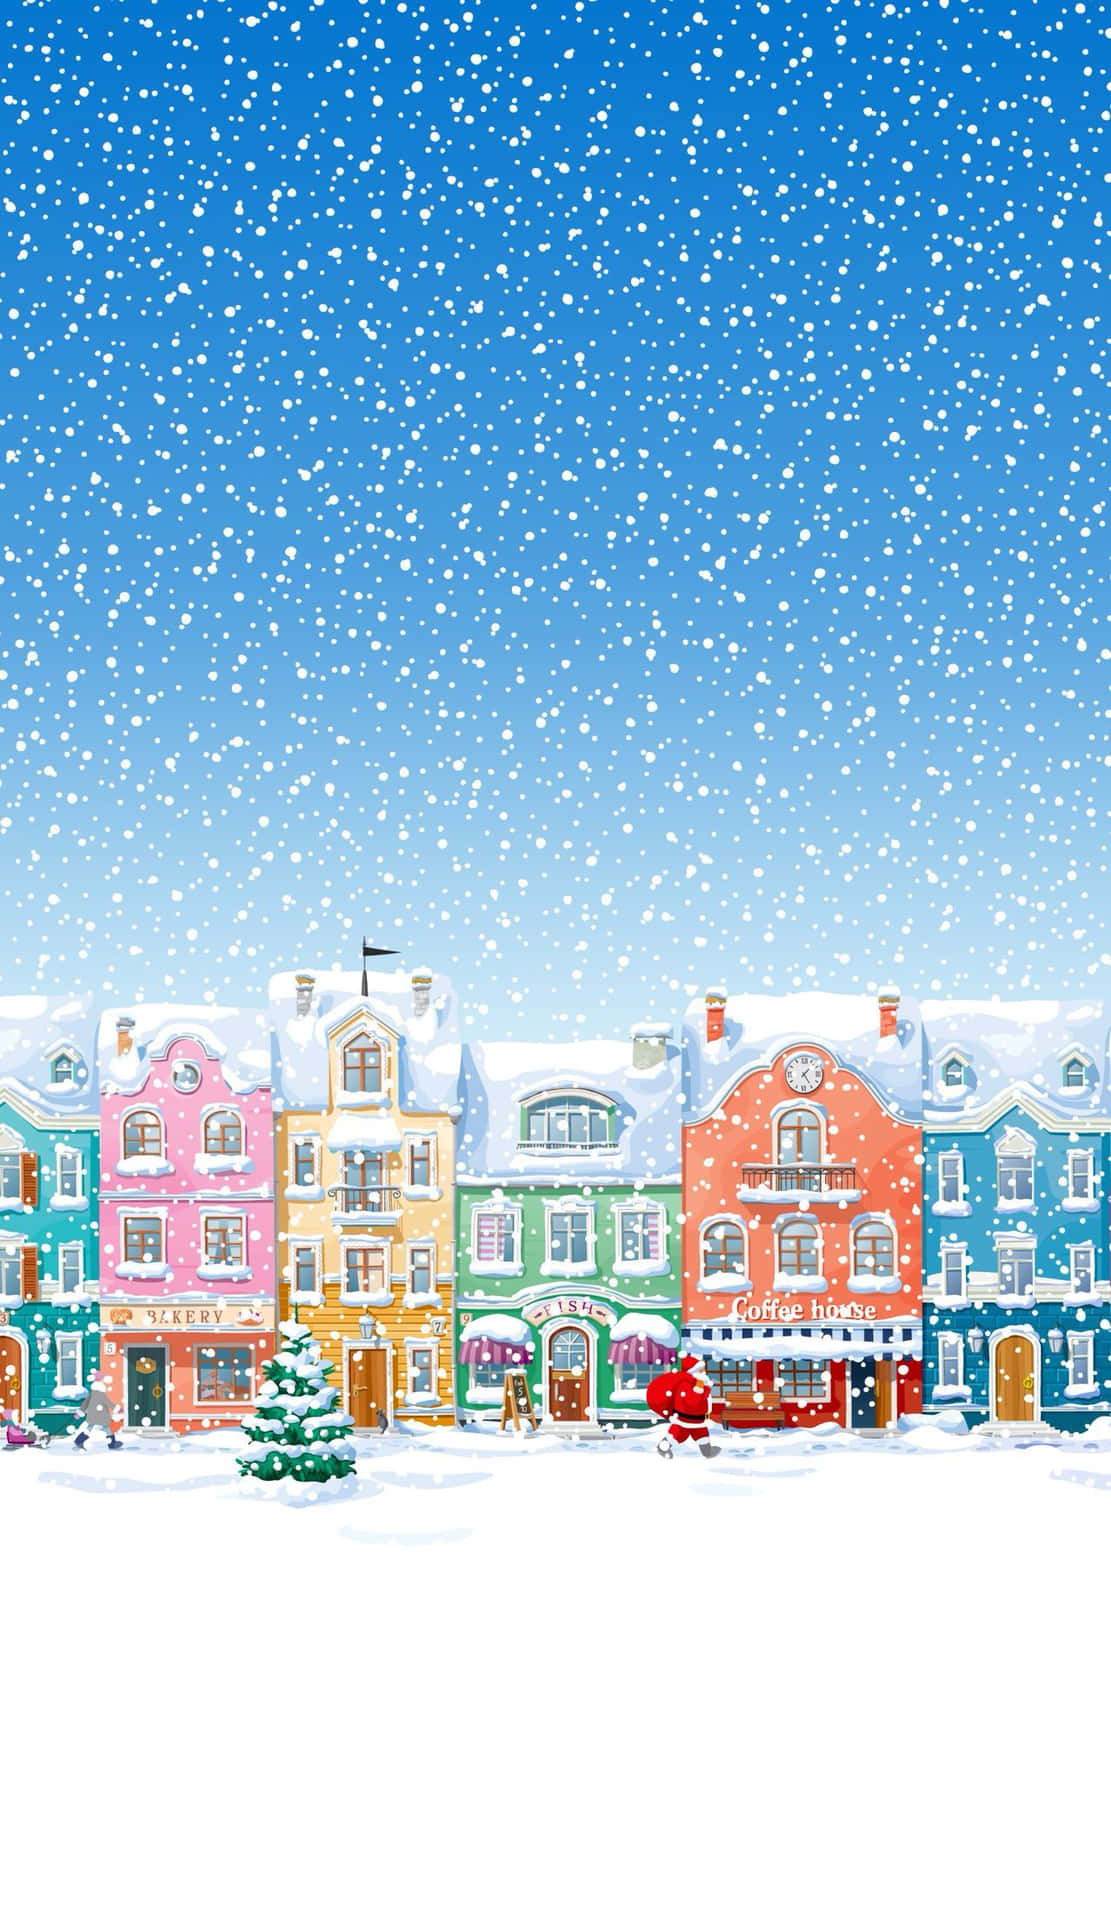 Seasonal Winter Buildings Cover Snow Cozy Background